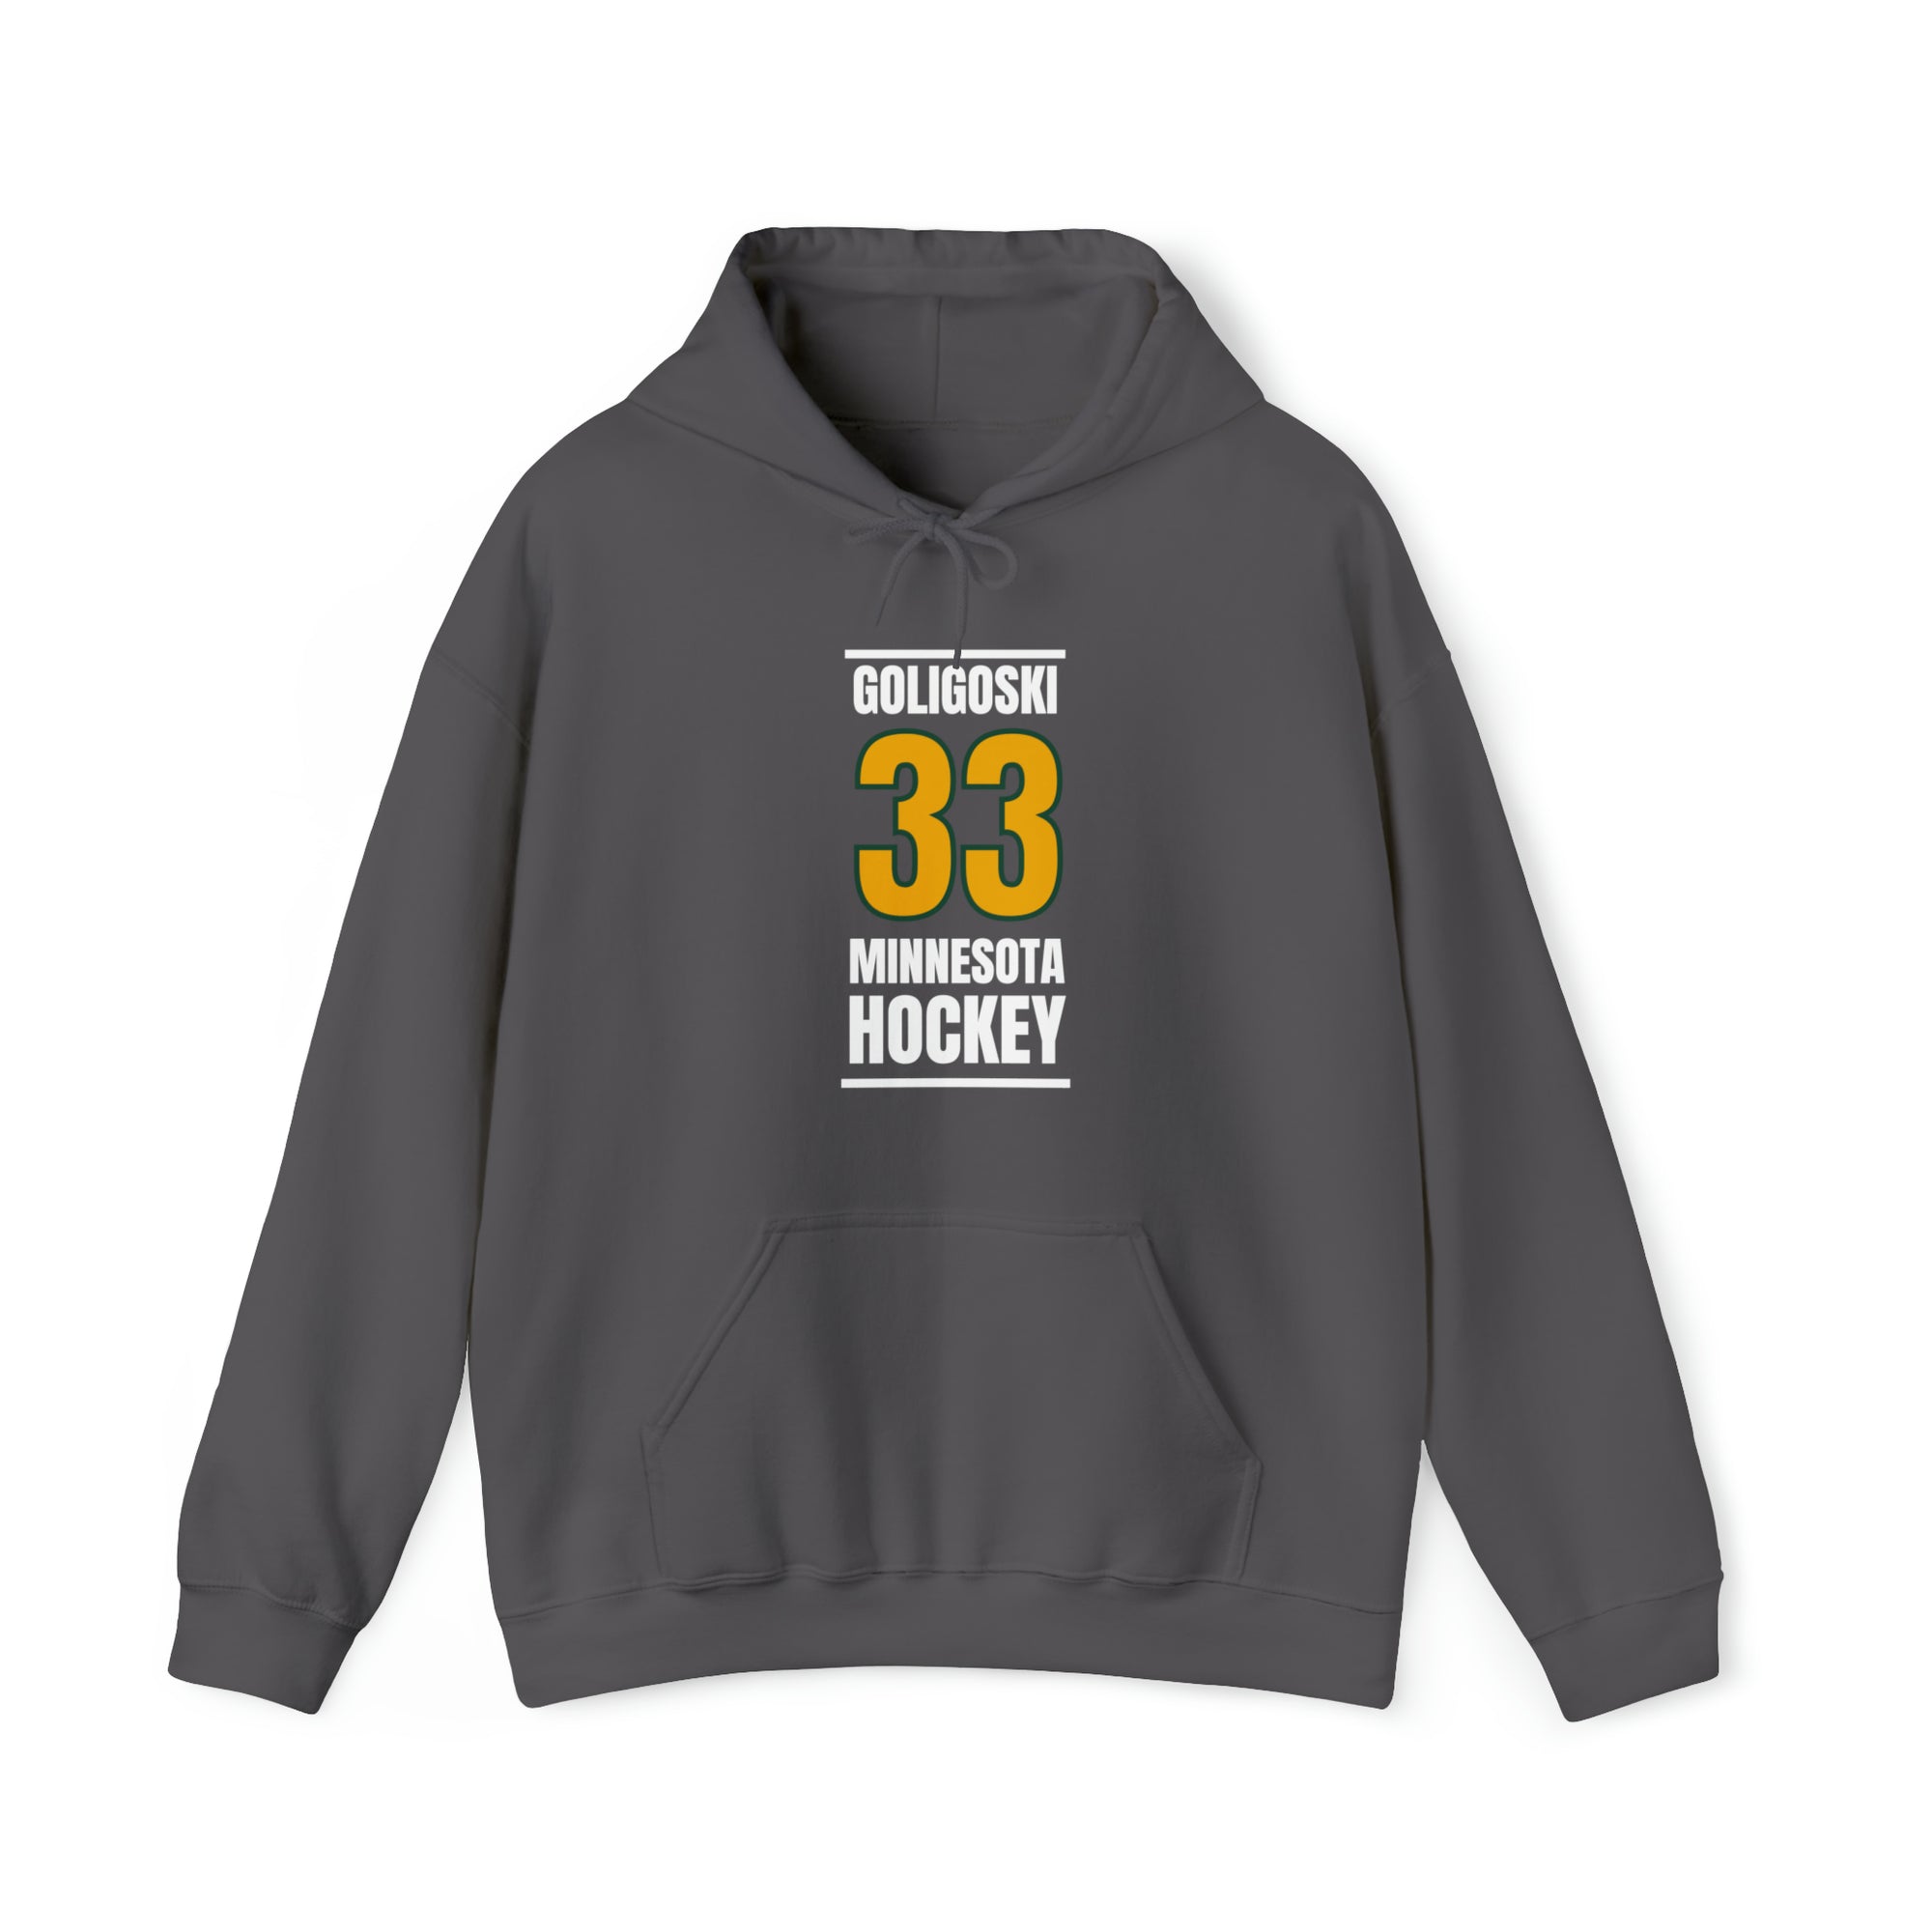 Goligoski 33 Minnesota Hockey Gold Vertical Design Unisex Hooded Sweatshirt